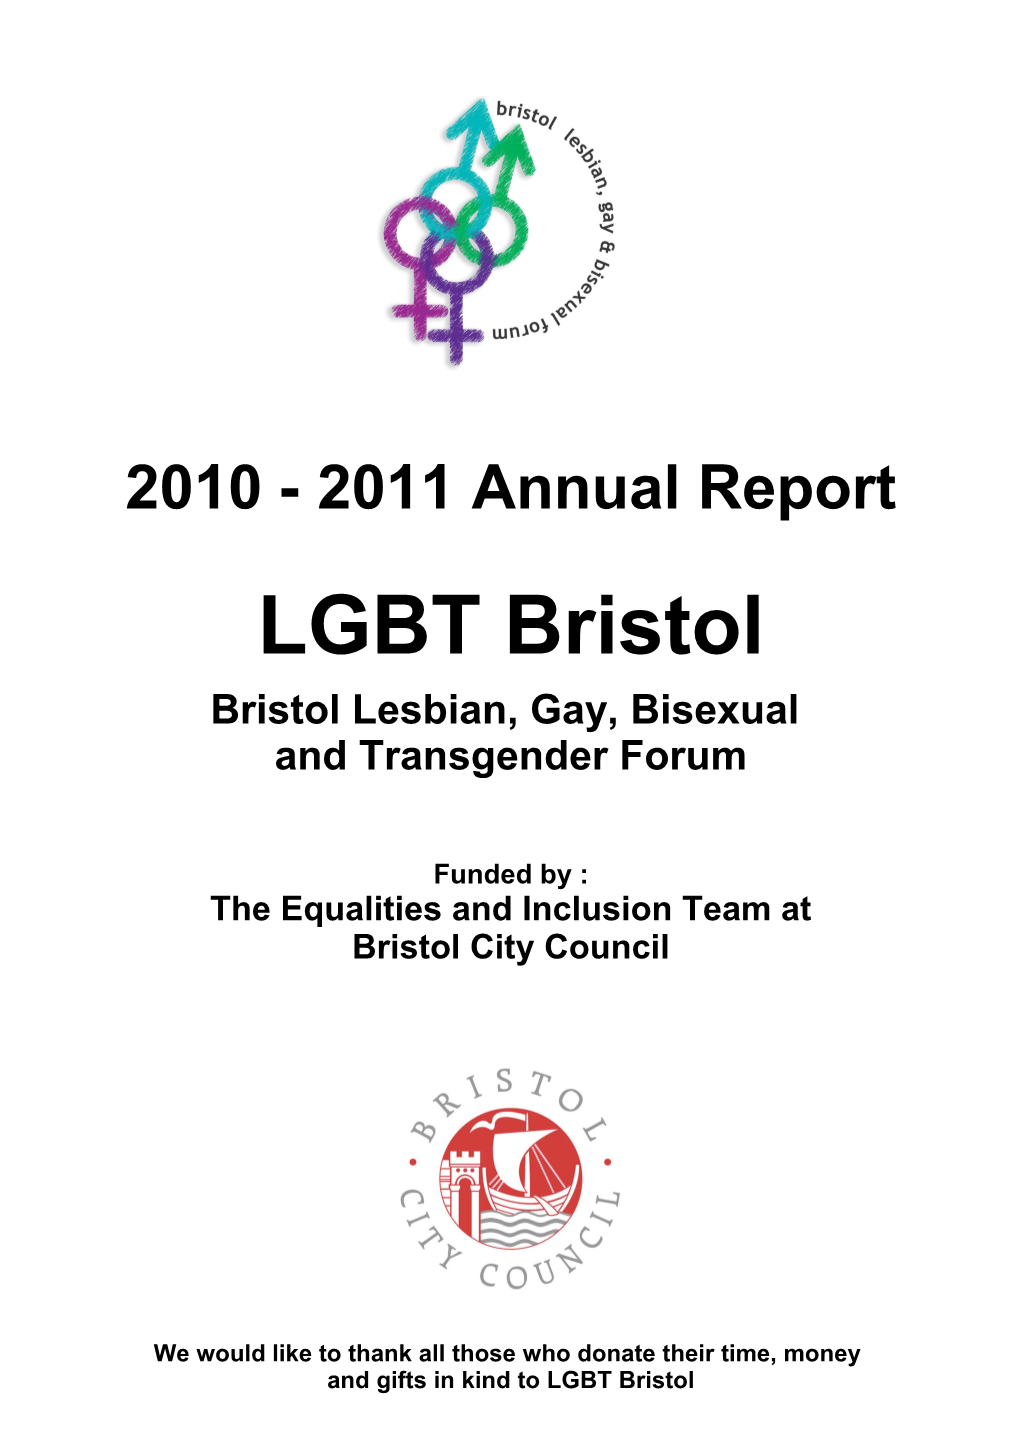 Bristol Lesbian, Gay, Bisexual